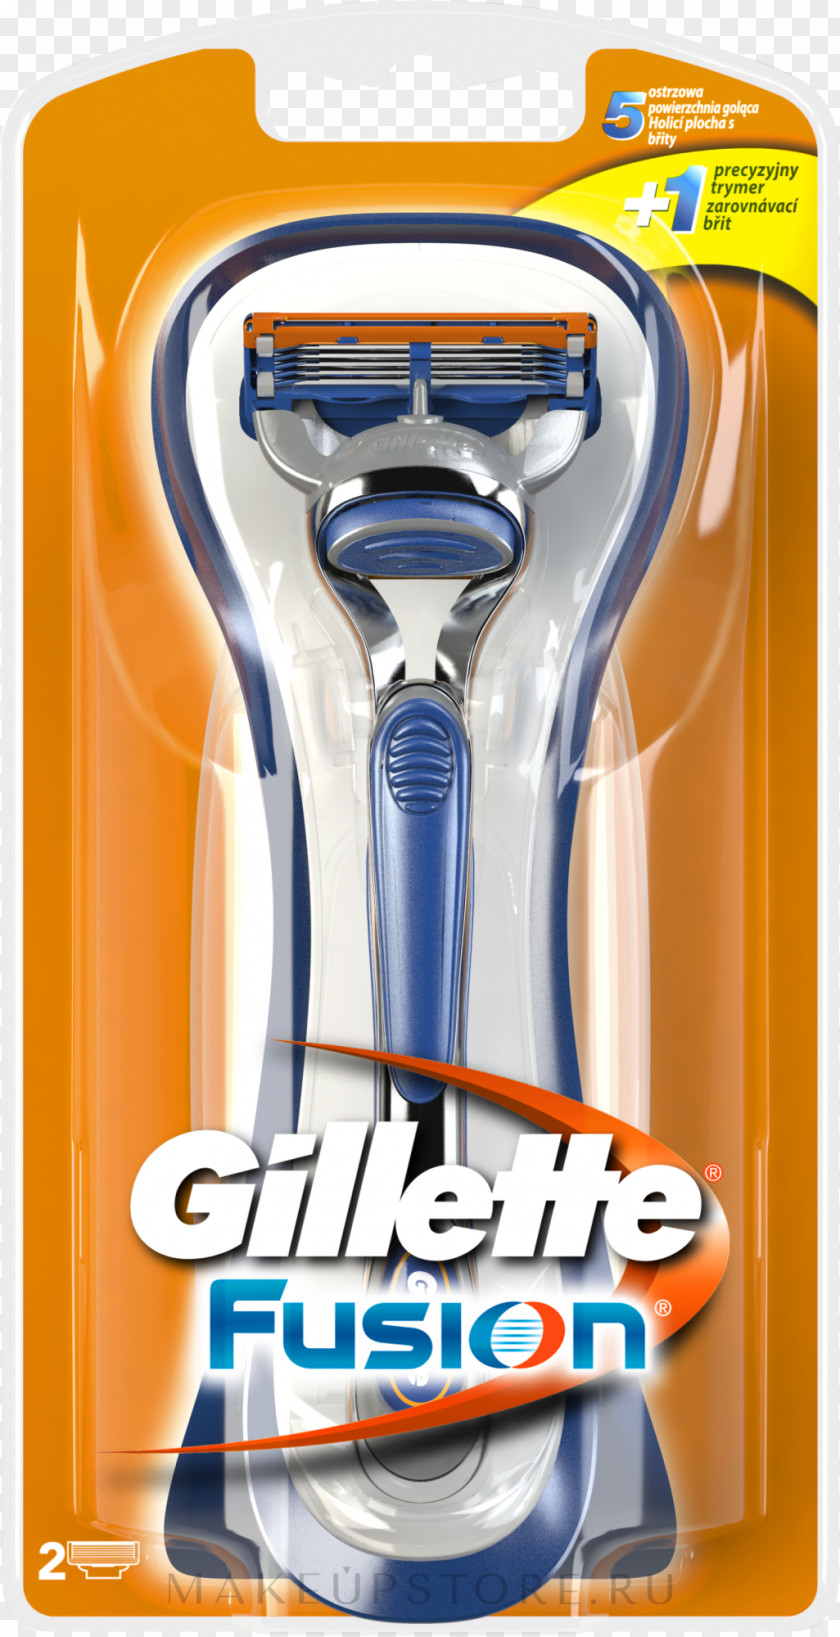 Gillette Mach3 Shaving Safety Razor PNG